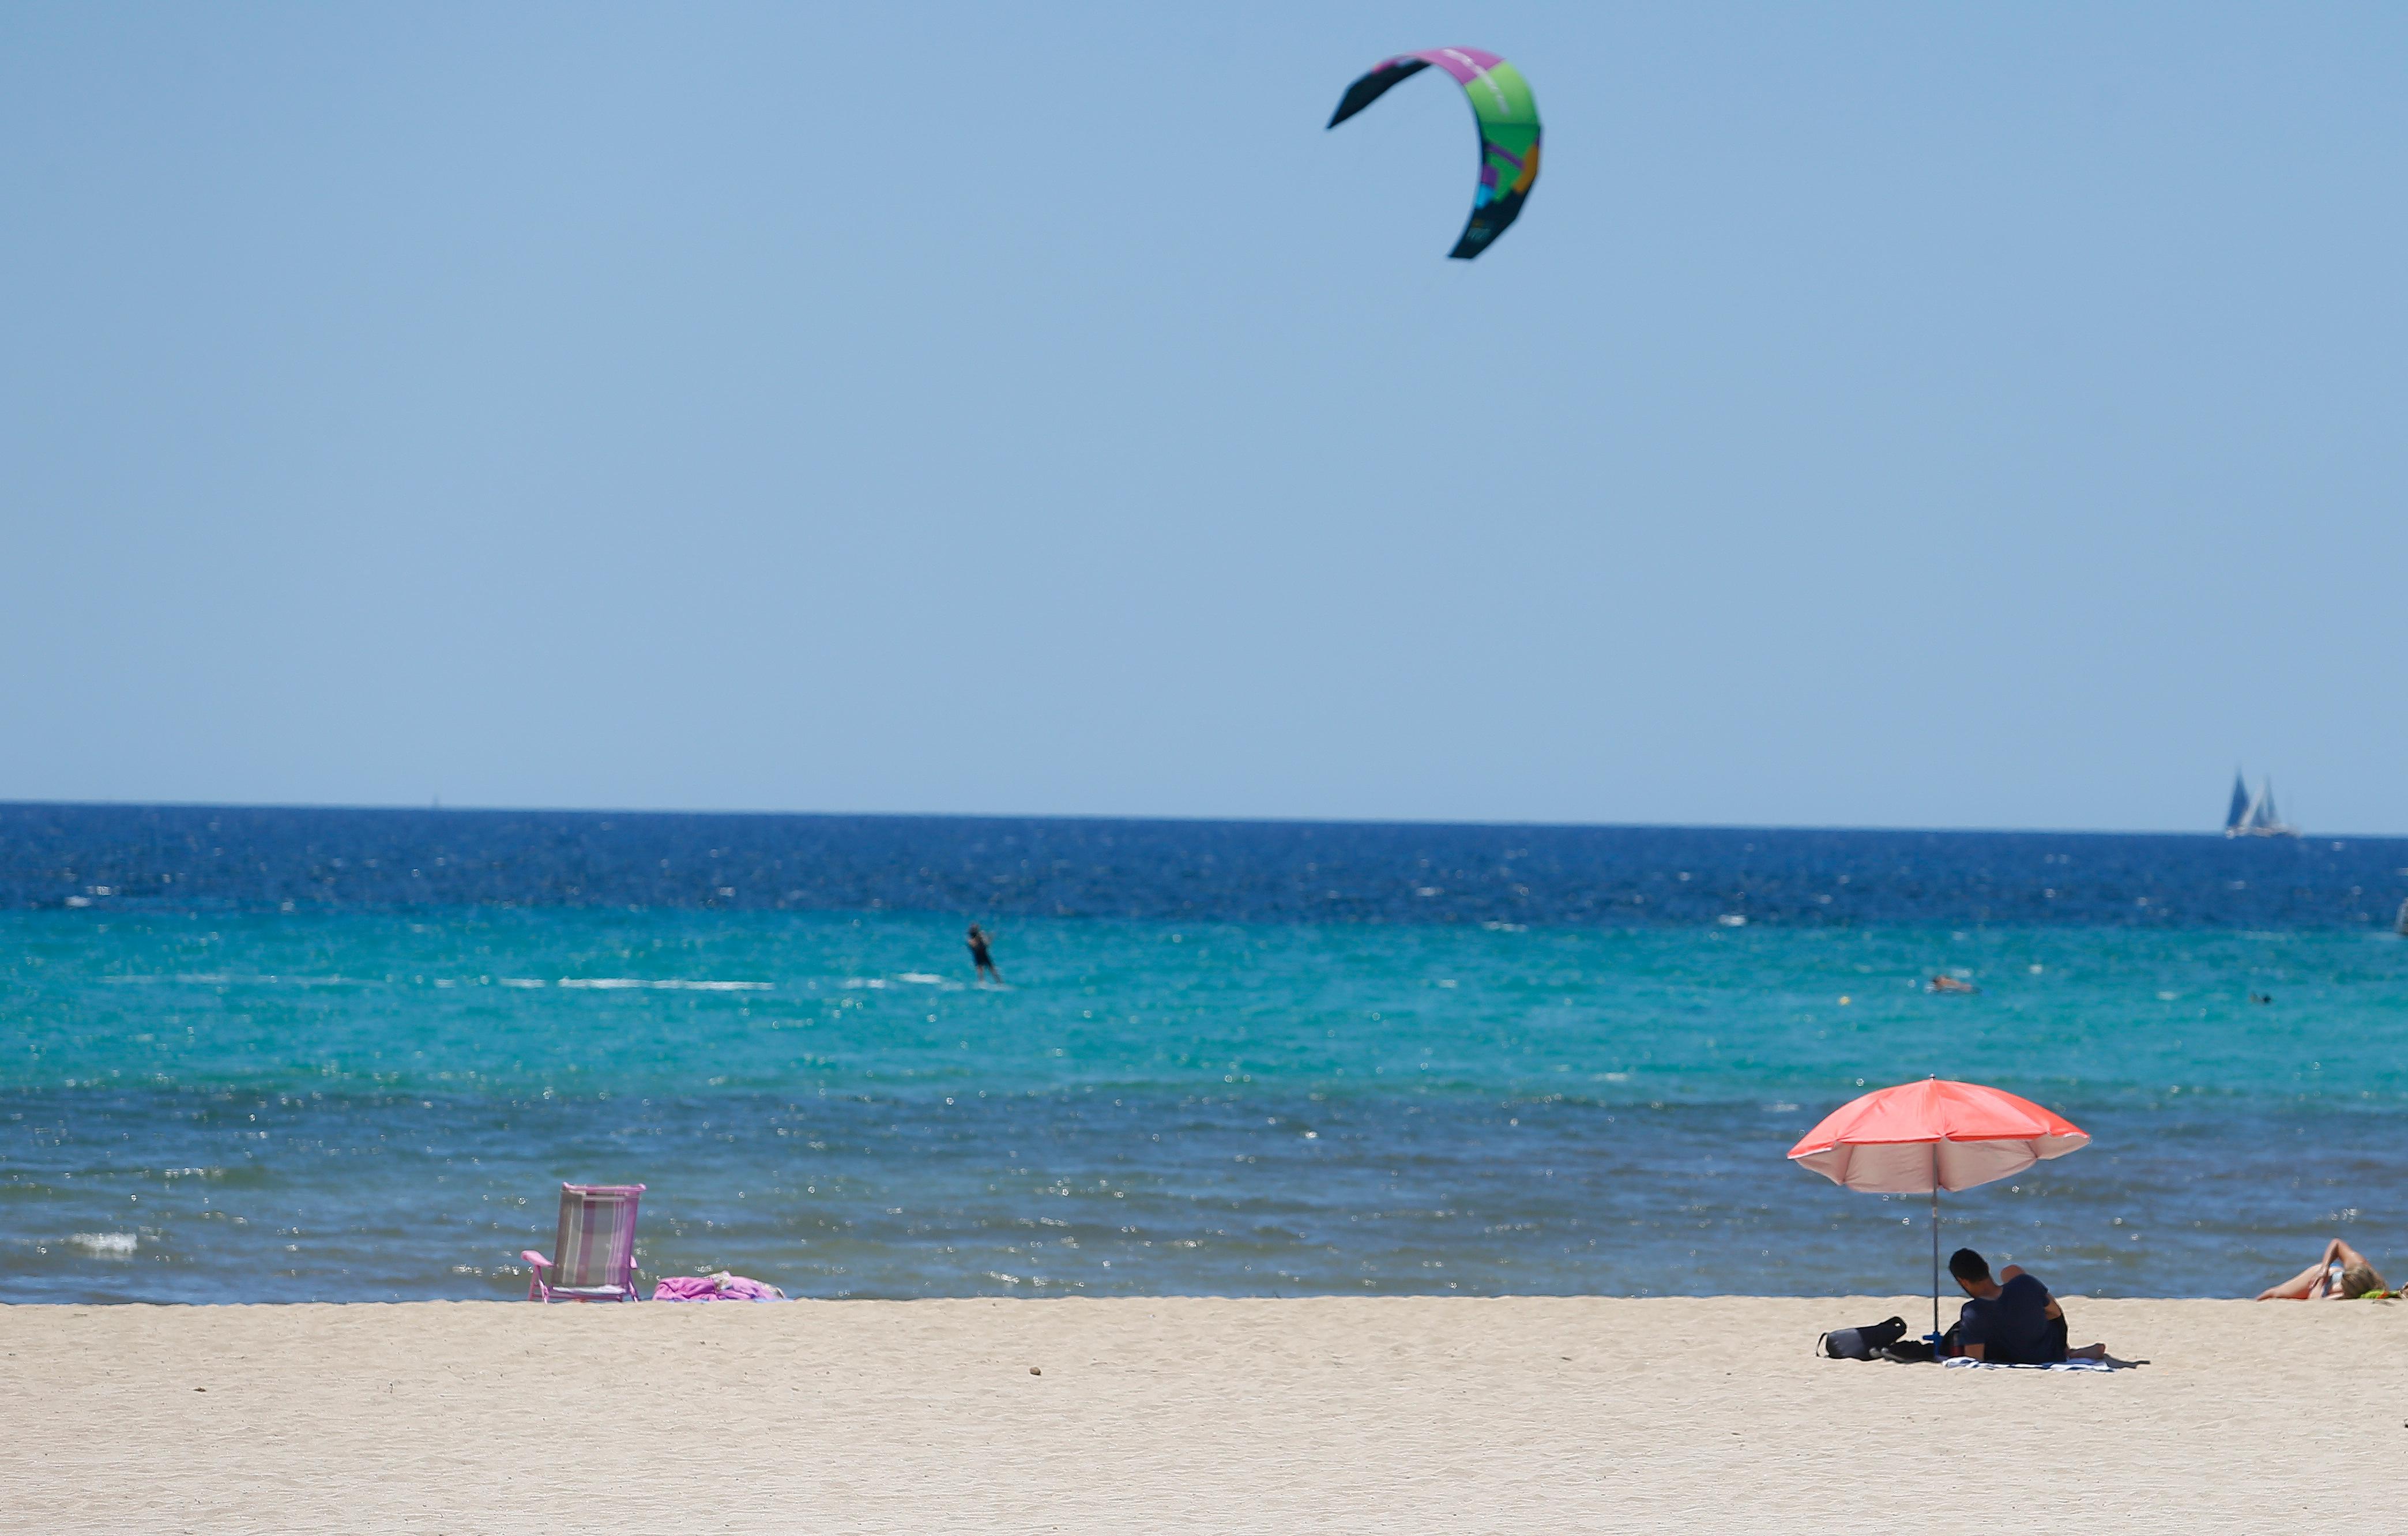  spain palma kitesurfer surfs on the beach arenal - EuropaPress